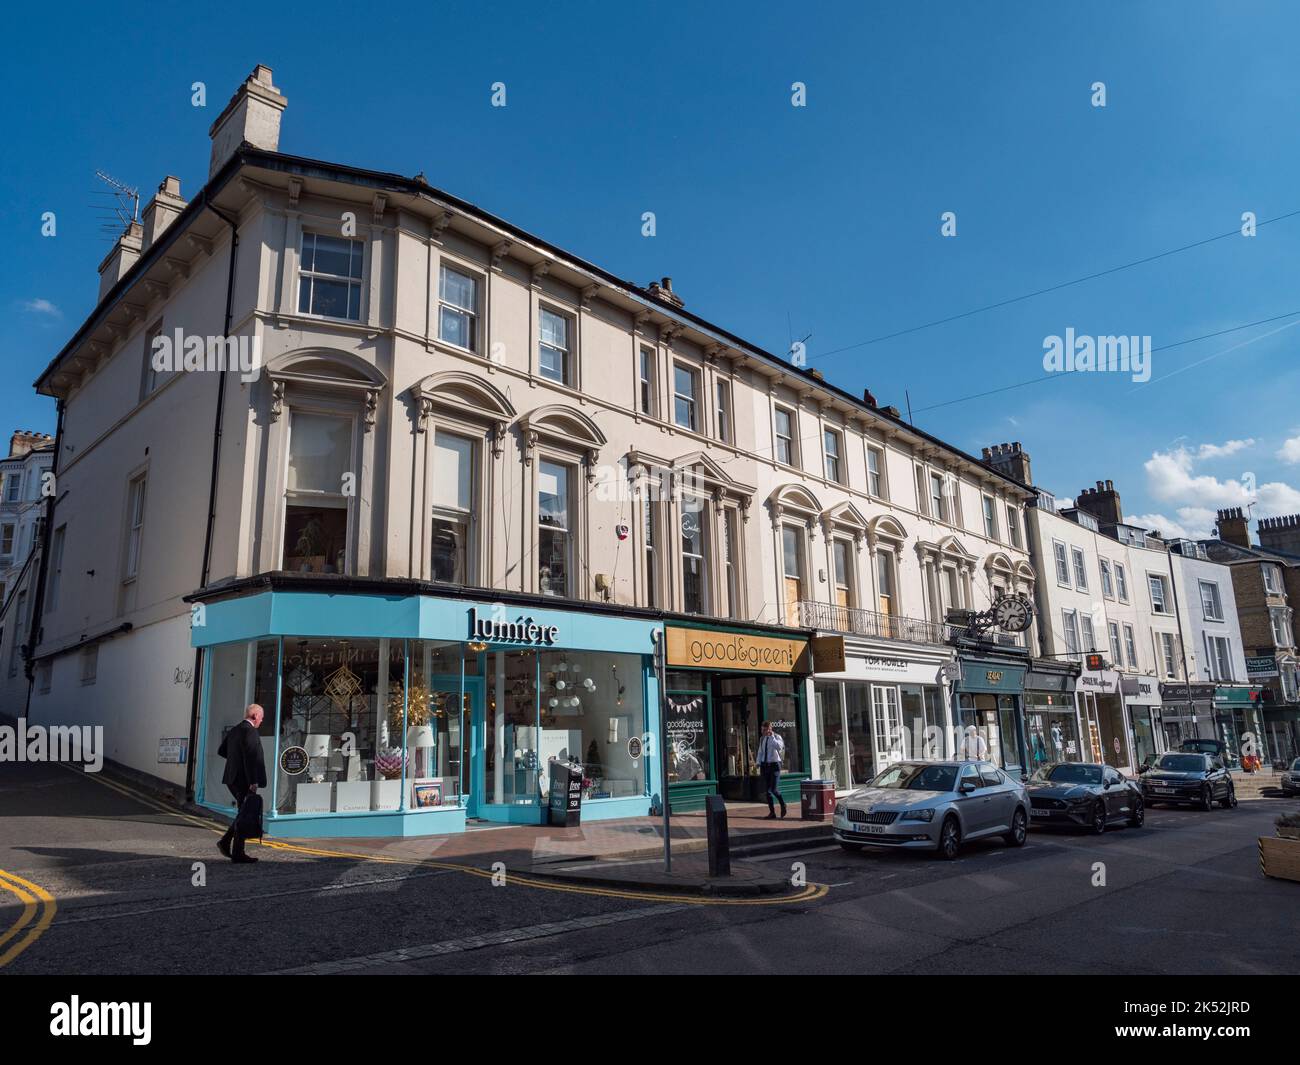 Parade of shops on High Street in Royal Tunbridge Wells, Kent, UK. Stock Photo